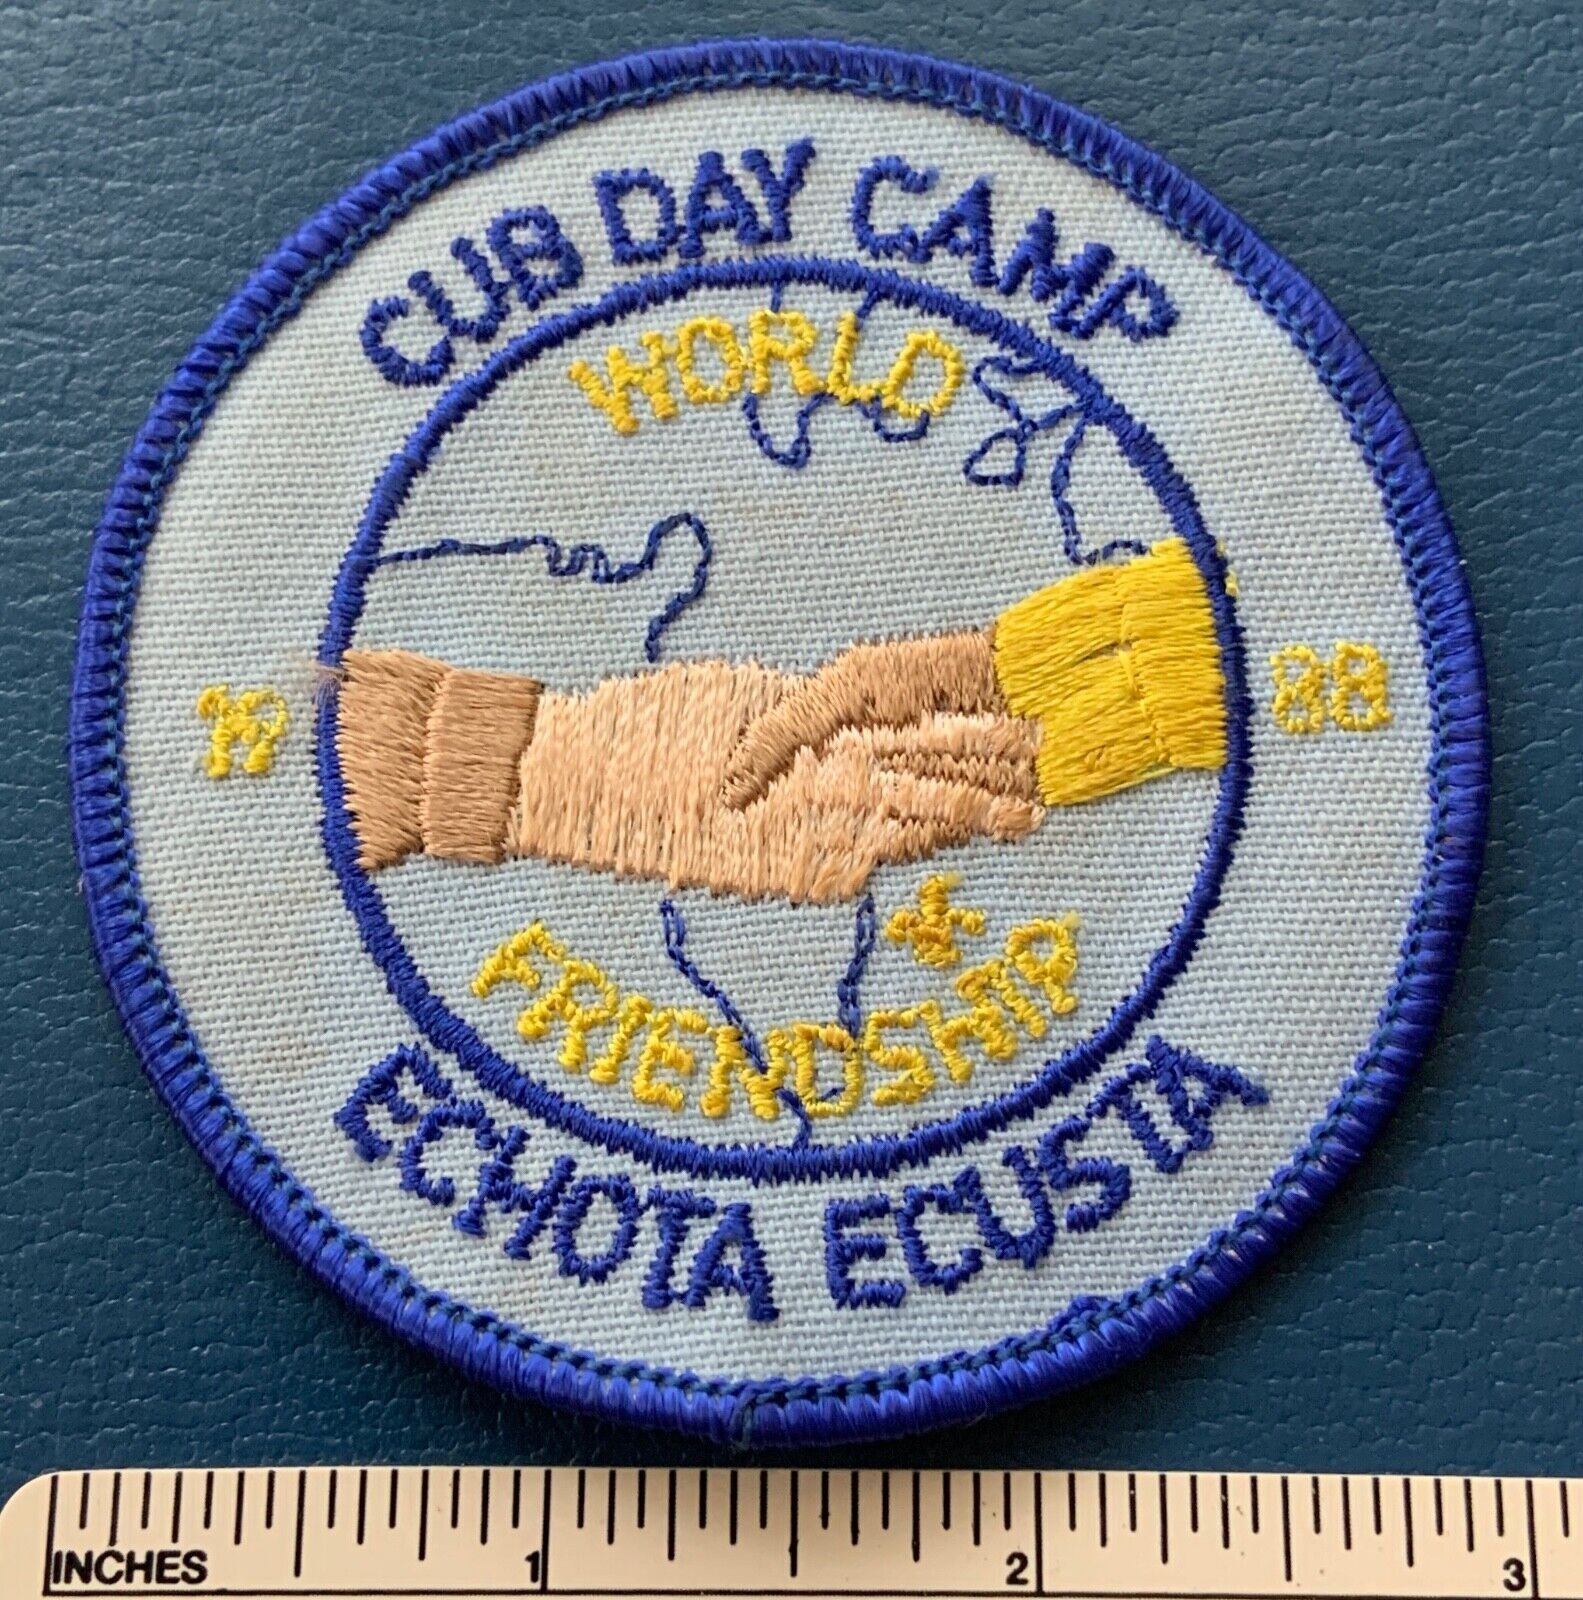 1988 ECHOTA ECUSTA Boy Scout Cub Day Camp World Friendship PATCH BSA Scouting